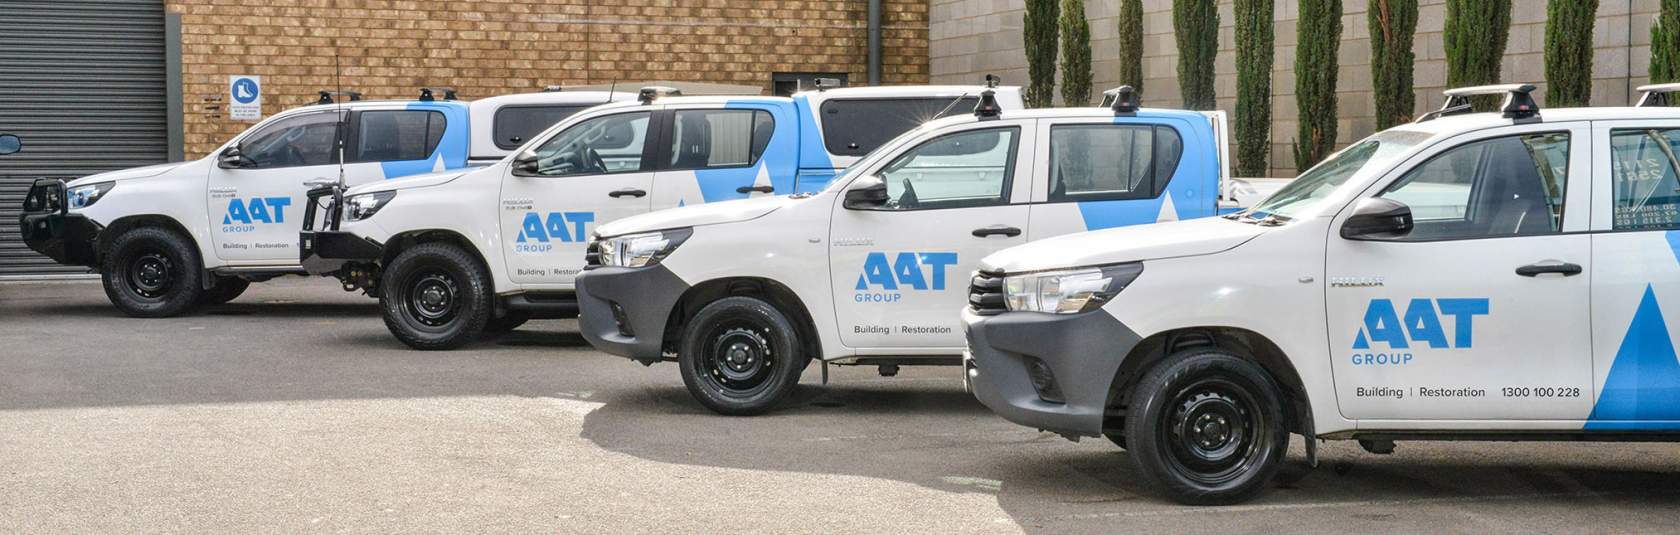 AAT Group Vehicles